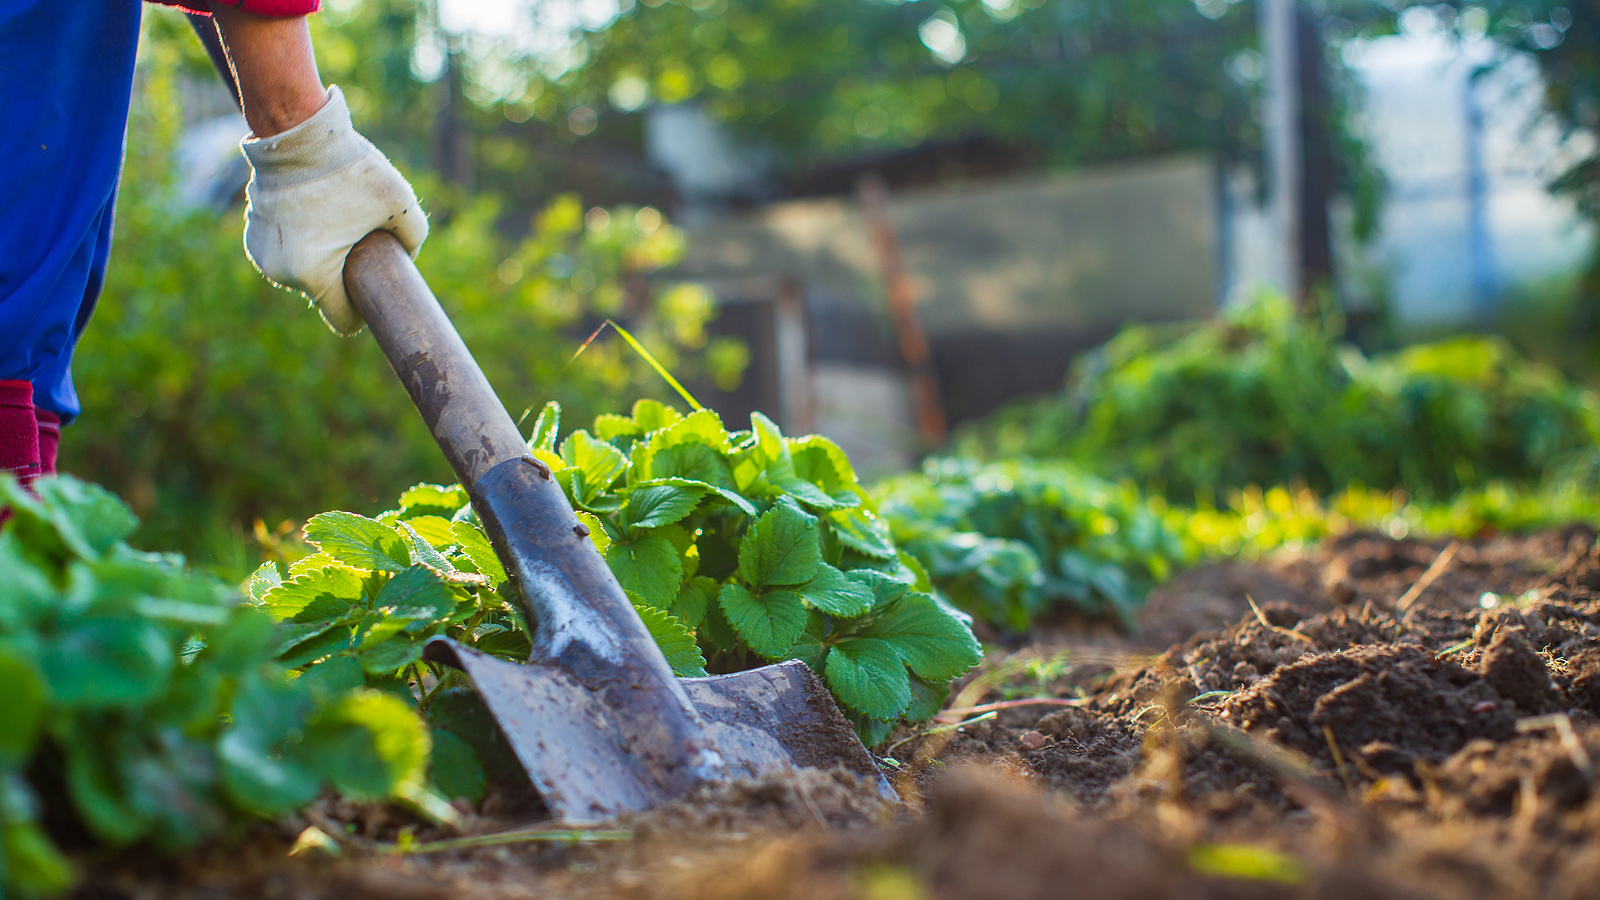 The Farmer Digs The Soil In The Vegetable Garden. Preparing The